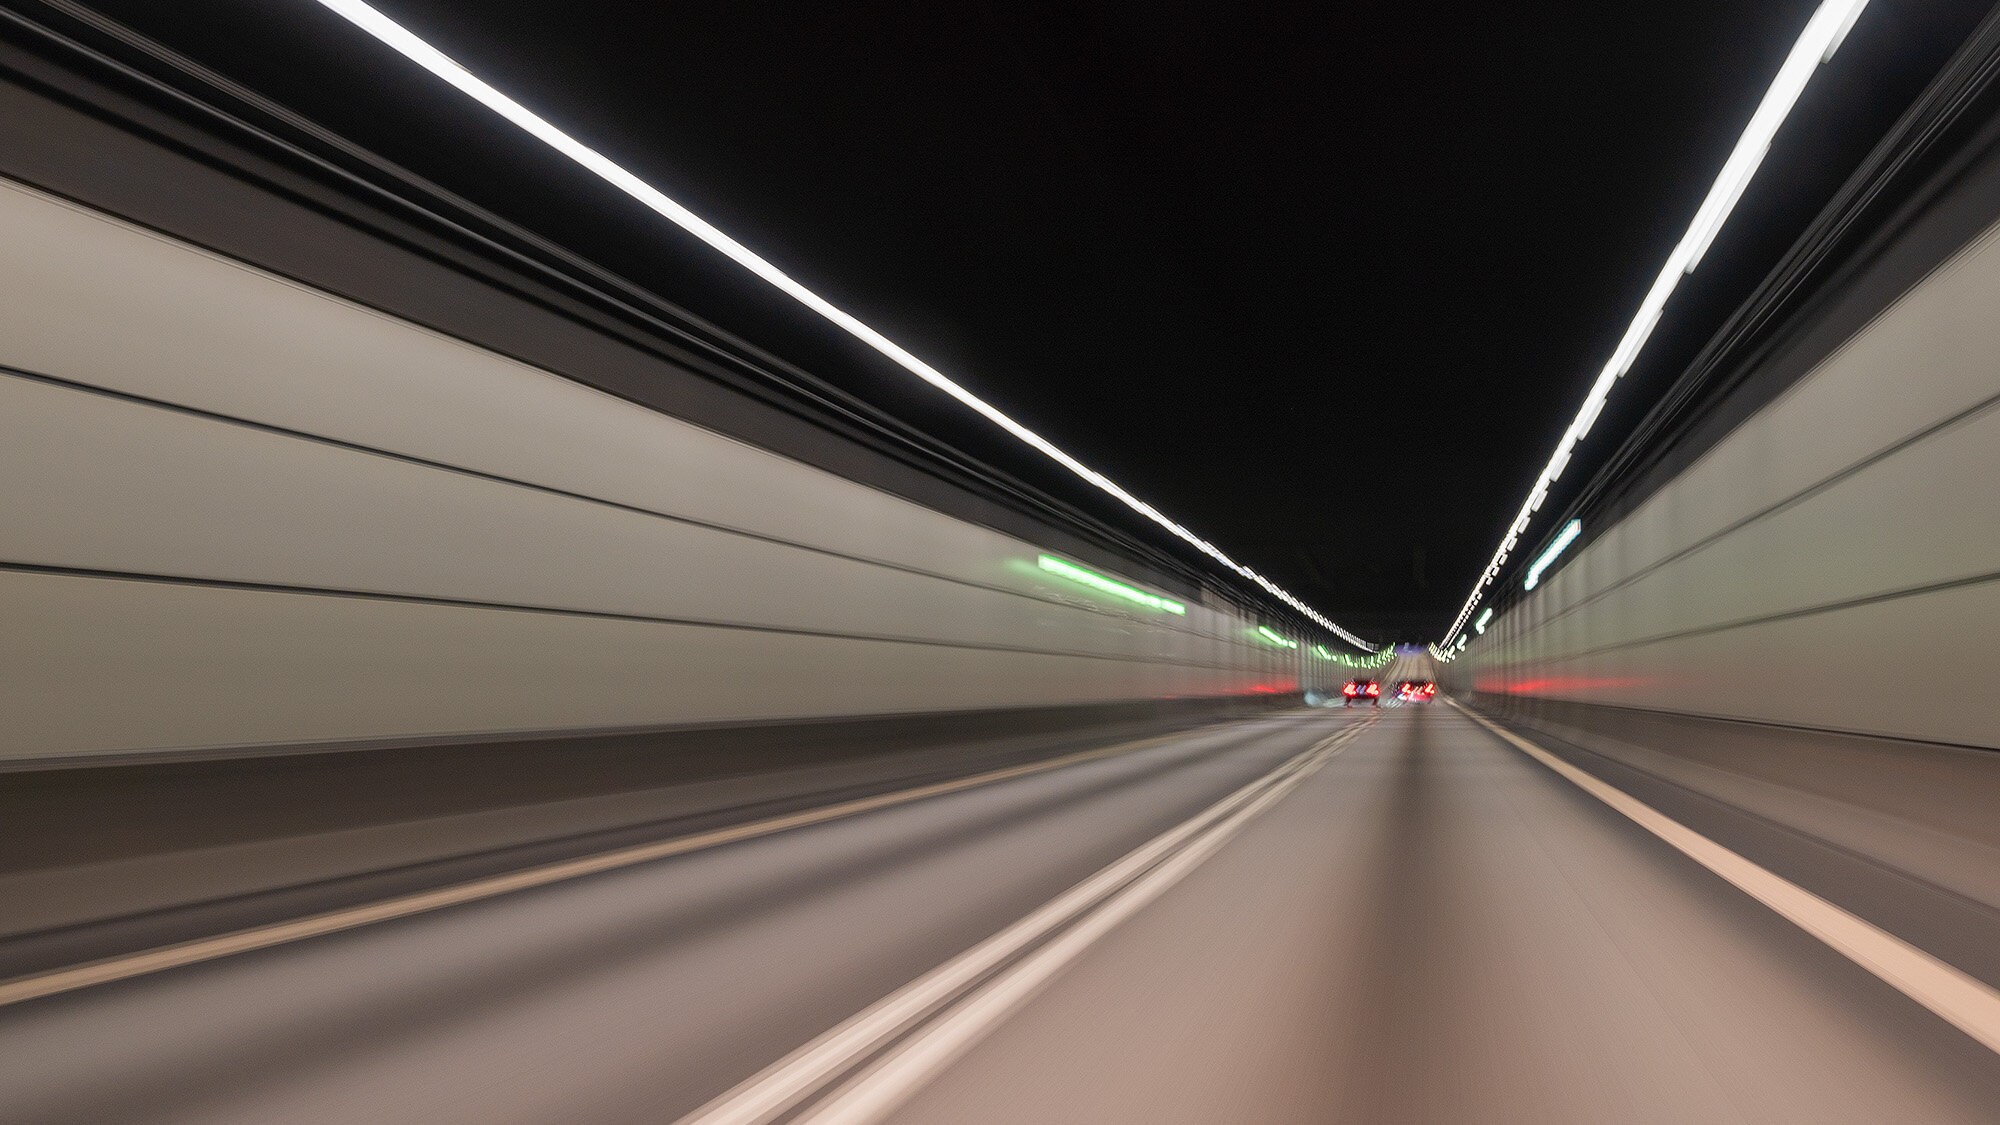 Full speed ahead, Øresundstunnellen